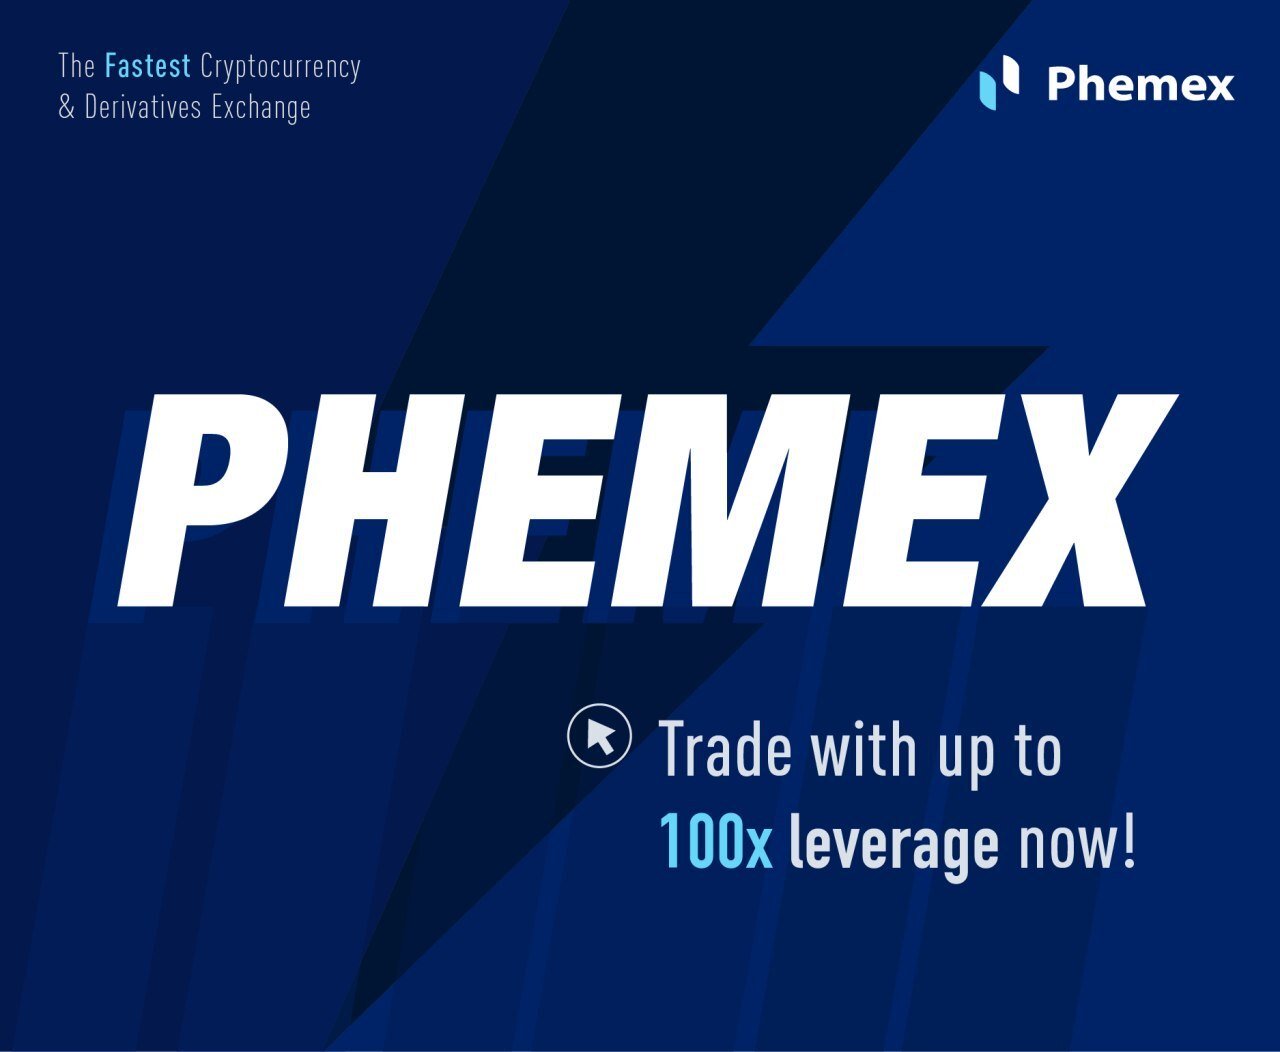 Phemex trade 100x leverage